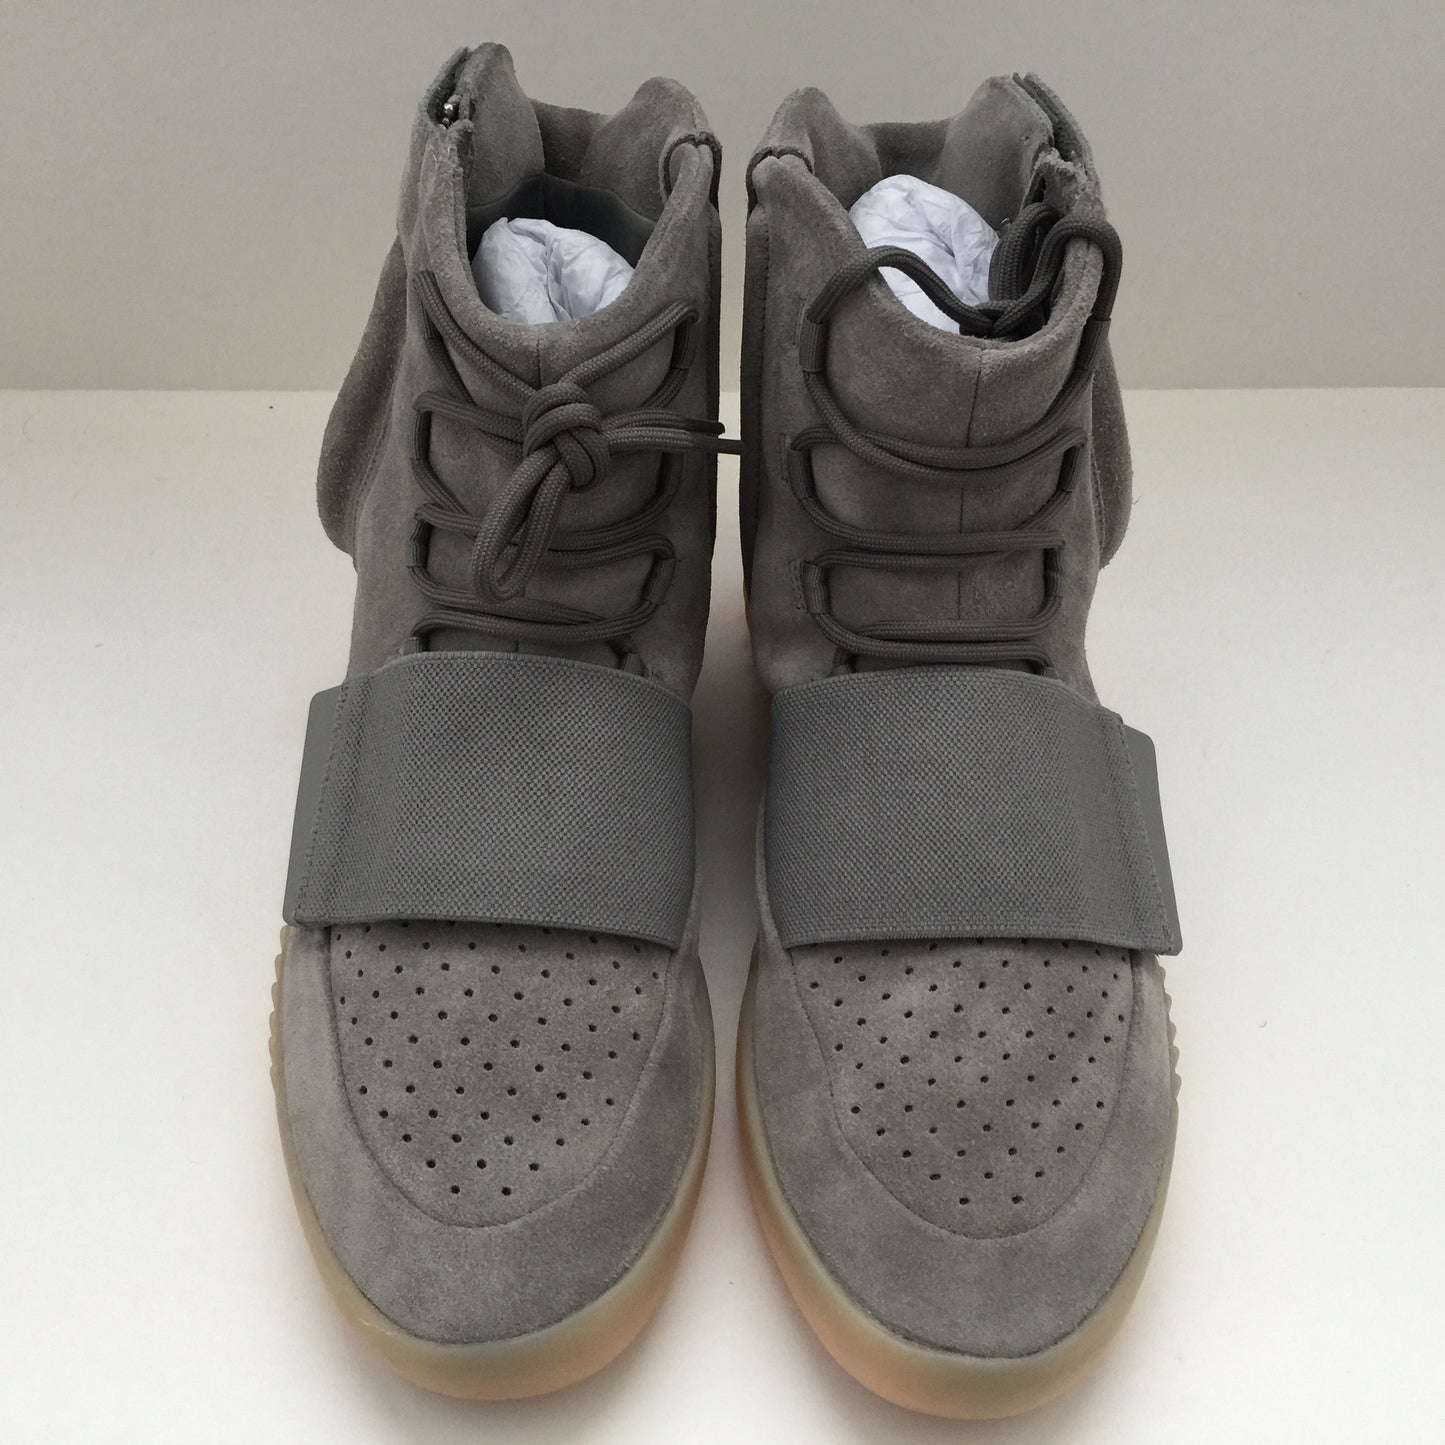 Adidas Yeezy Boost 750 Grey/Gum Size 11 - DOPEFOOT
 - 3